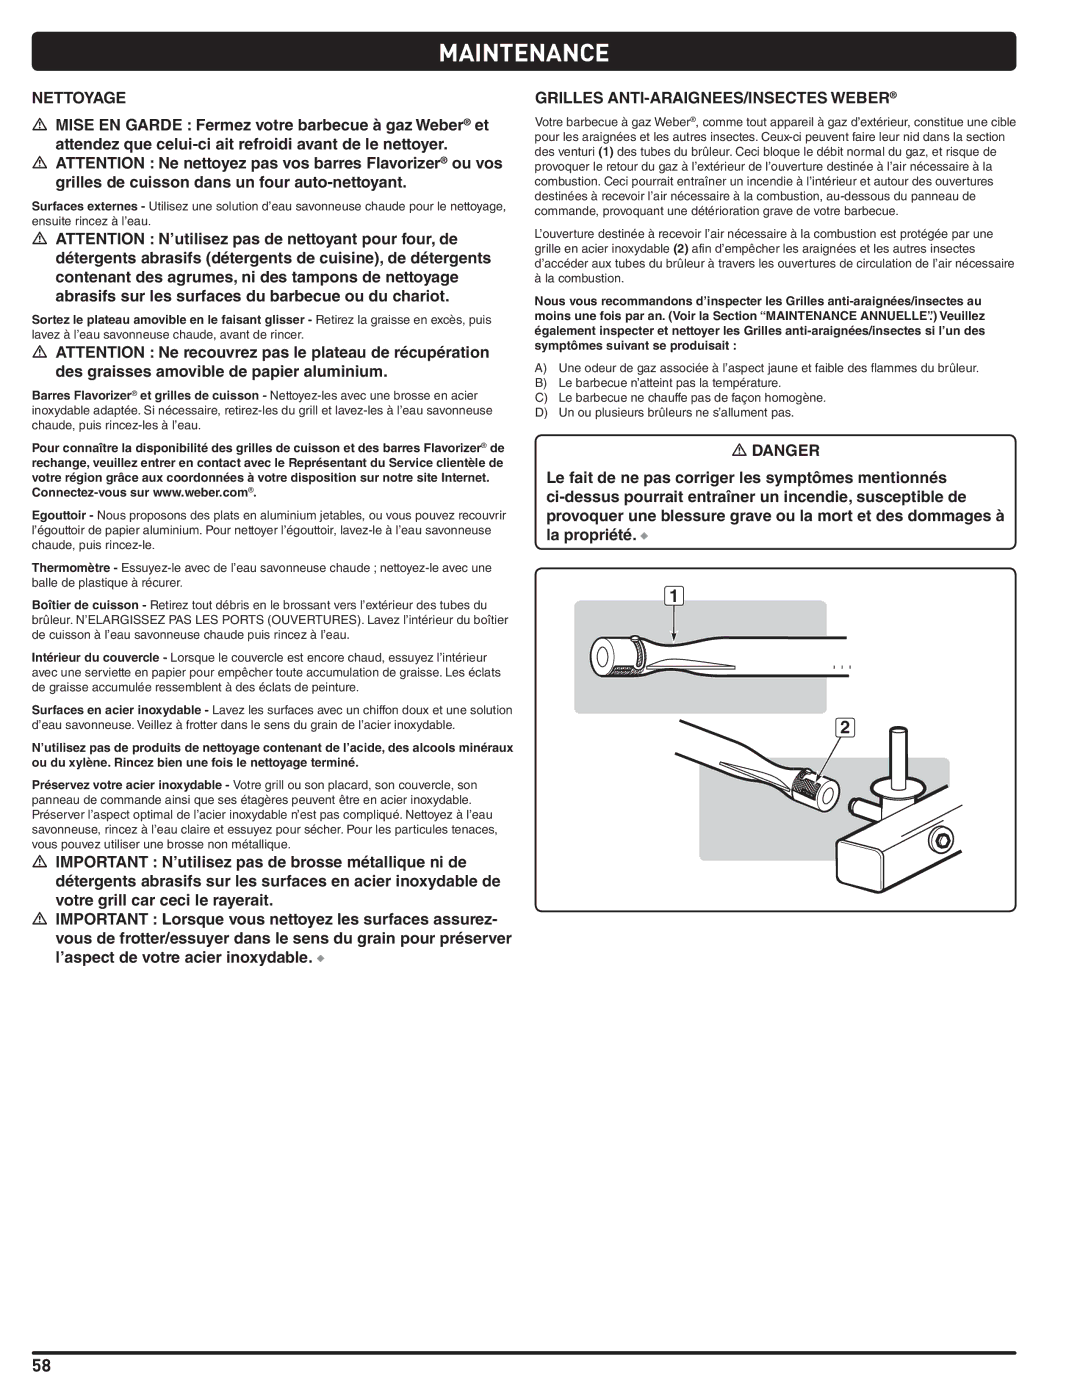 Weber 89963 manual Nettoyage, Grilles ANTI-ARAIGNEES/INSECTES Weber 